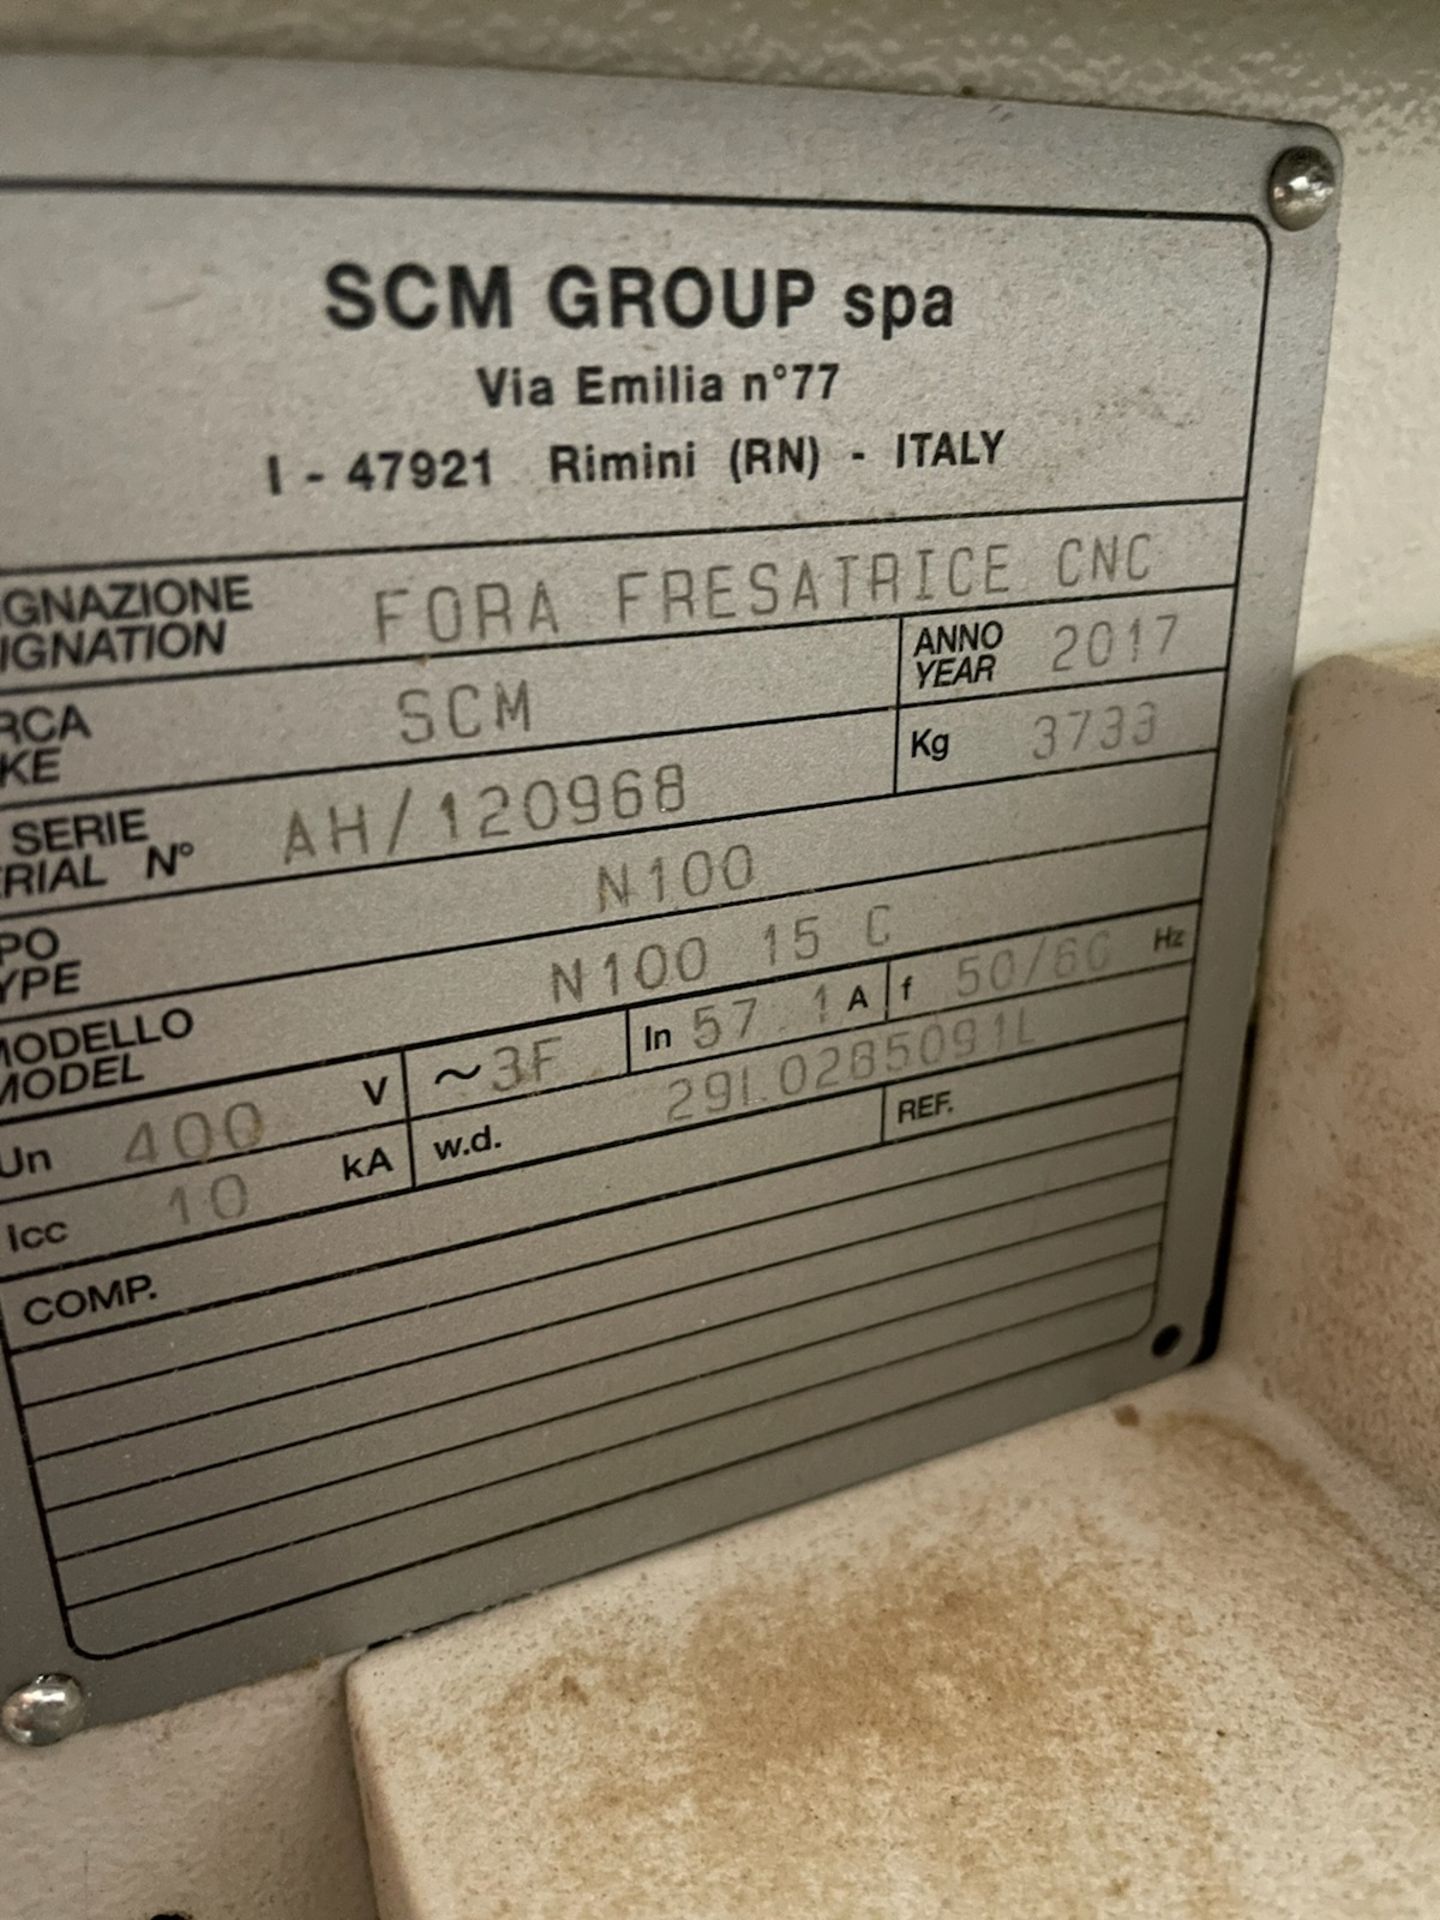 5' X 12' SCM MORBIDELLI N100 15 C CNC ROUTER, S/N AH/120968, NEW 2017 - Image 7 of 7